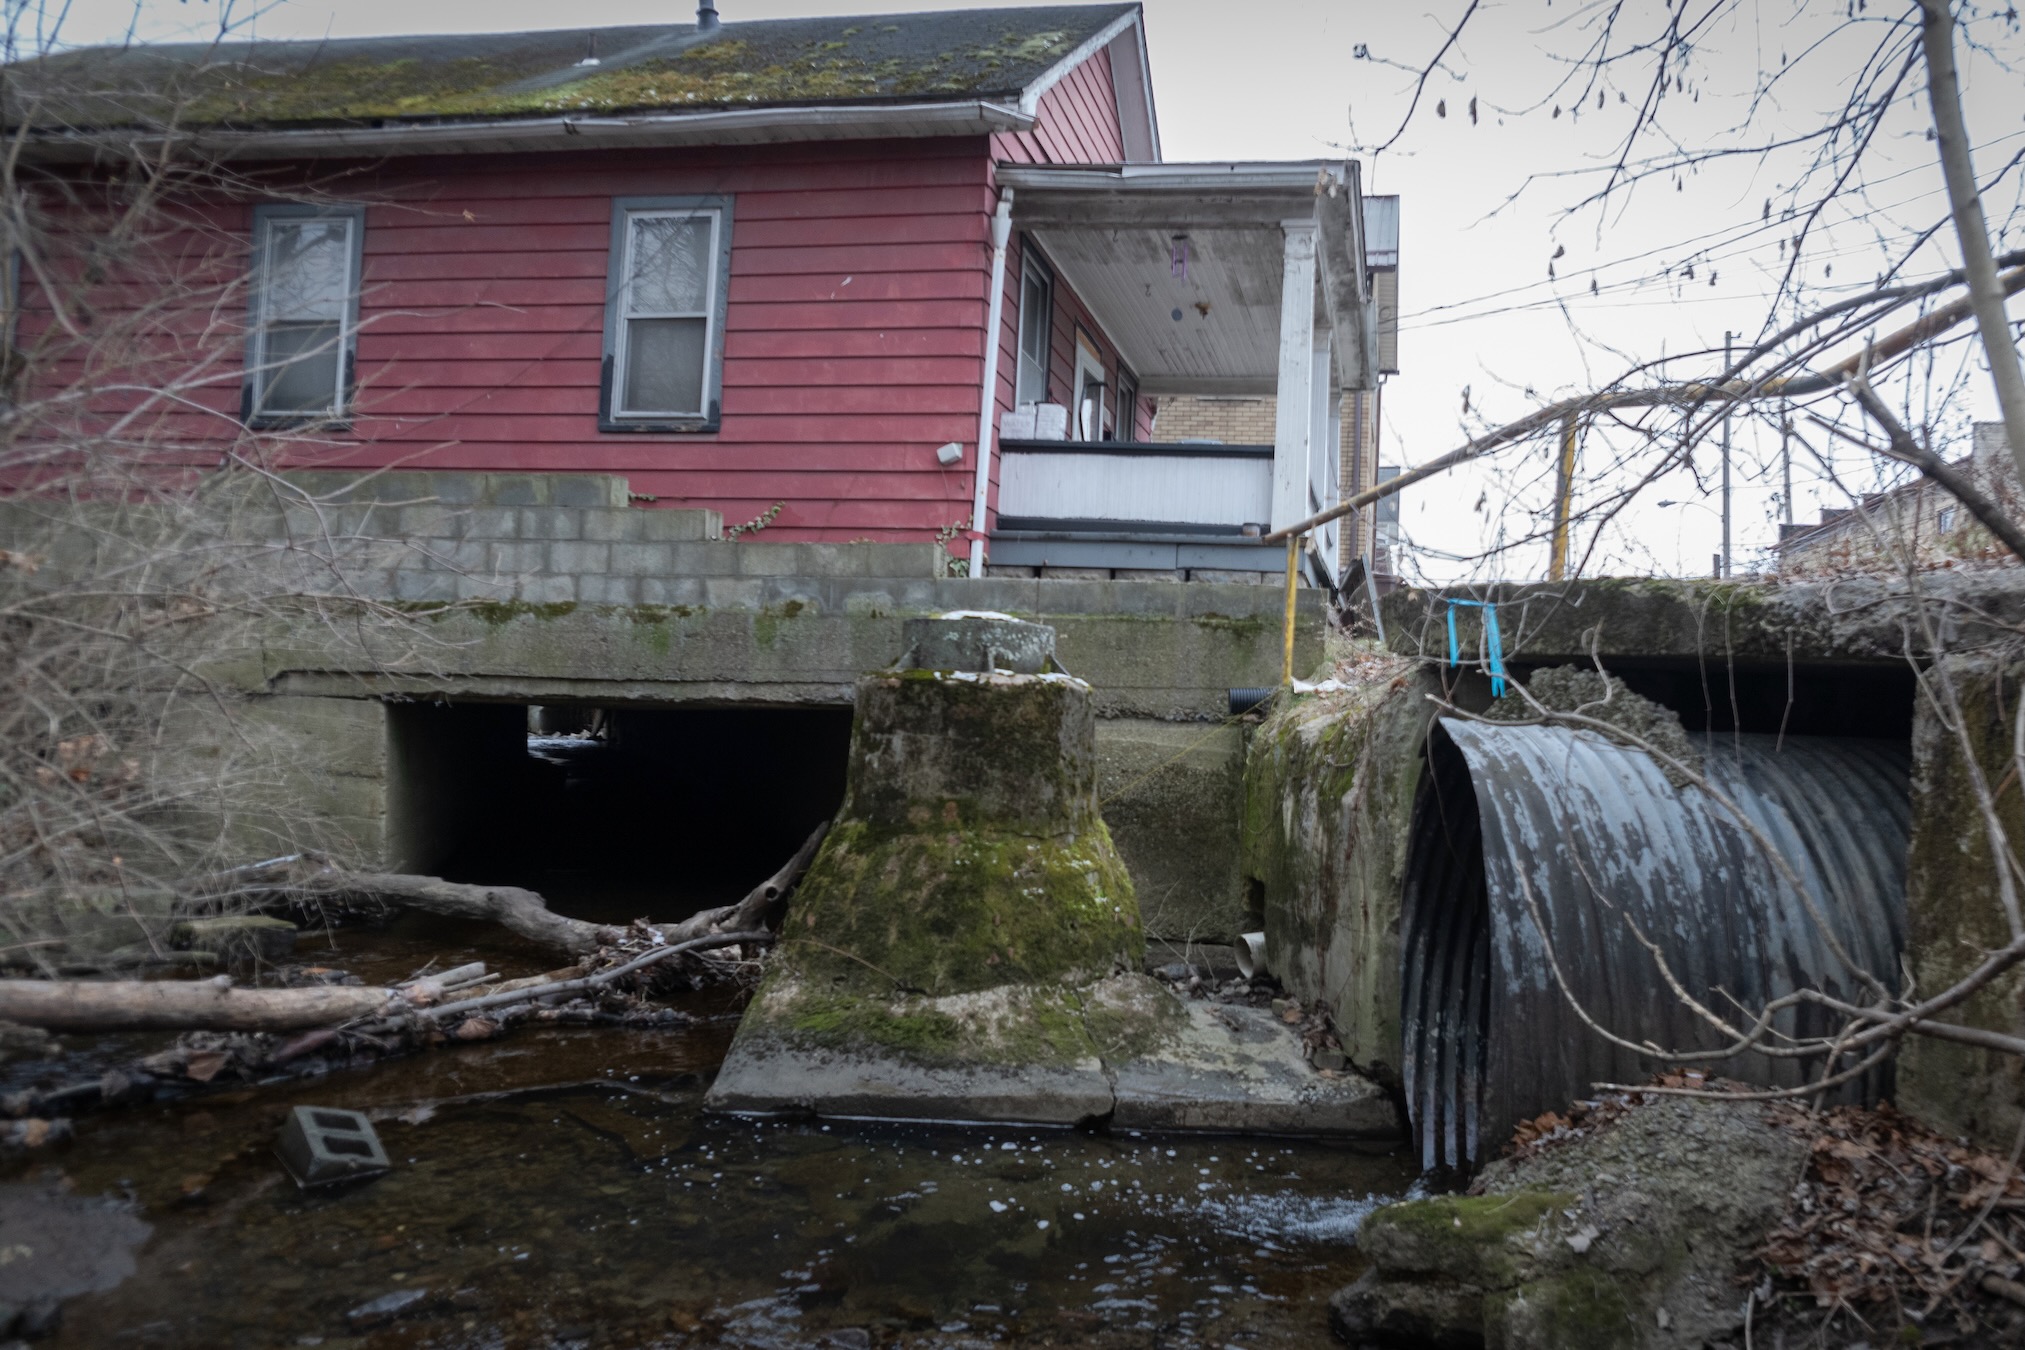 A stream goes under a house through a large culvert